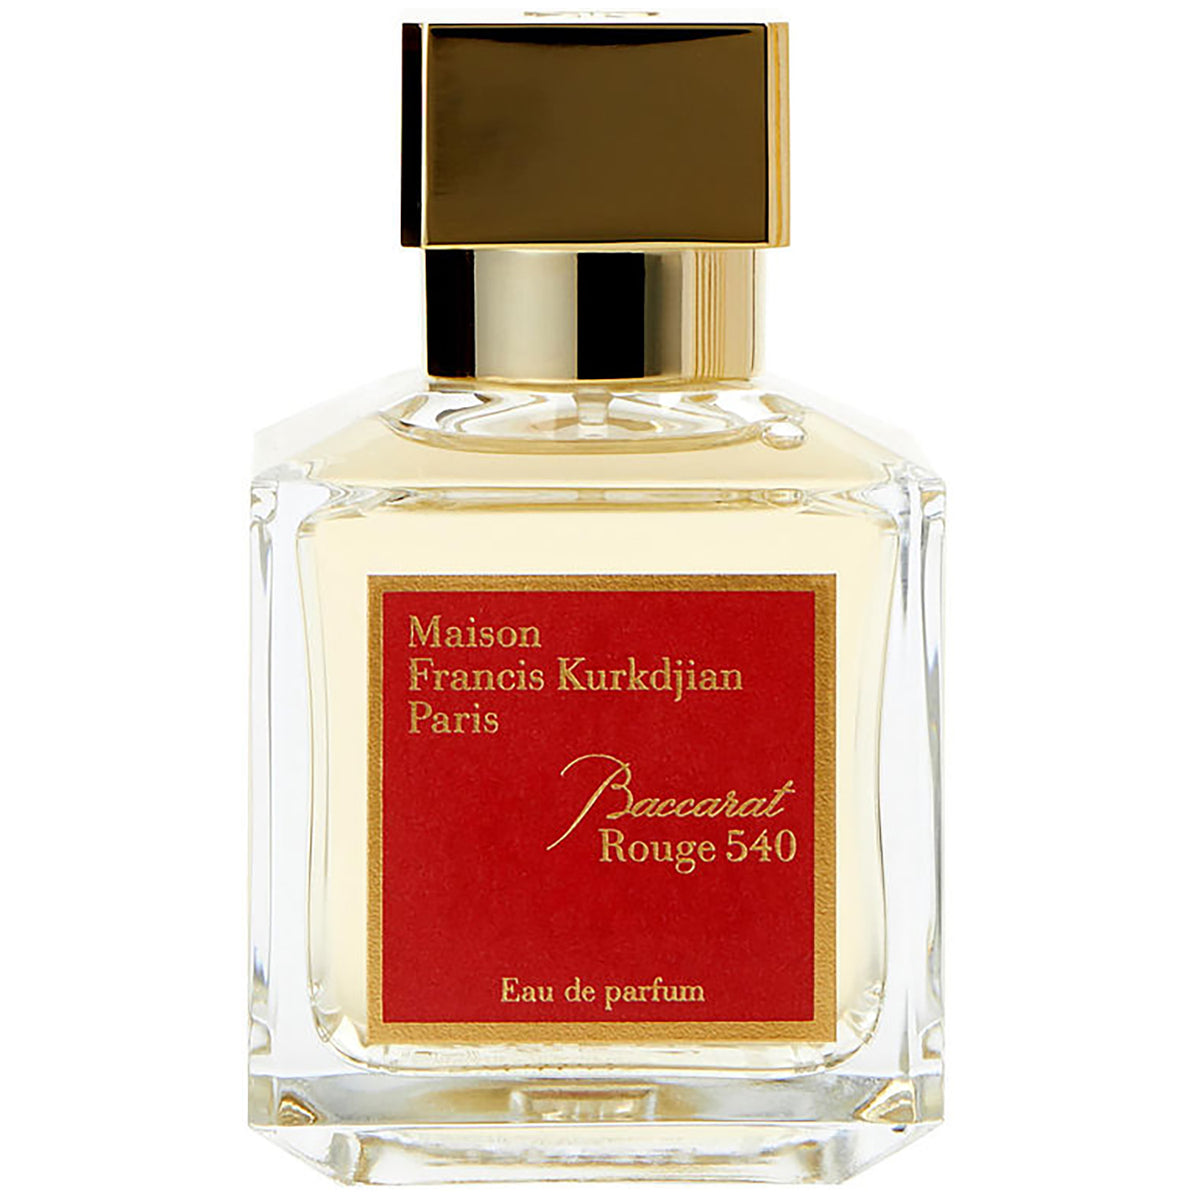 Baccarat Rouge 540 by Maison Francis Kurkdjian Fragrance Samples, DecantX